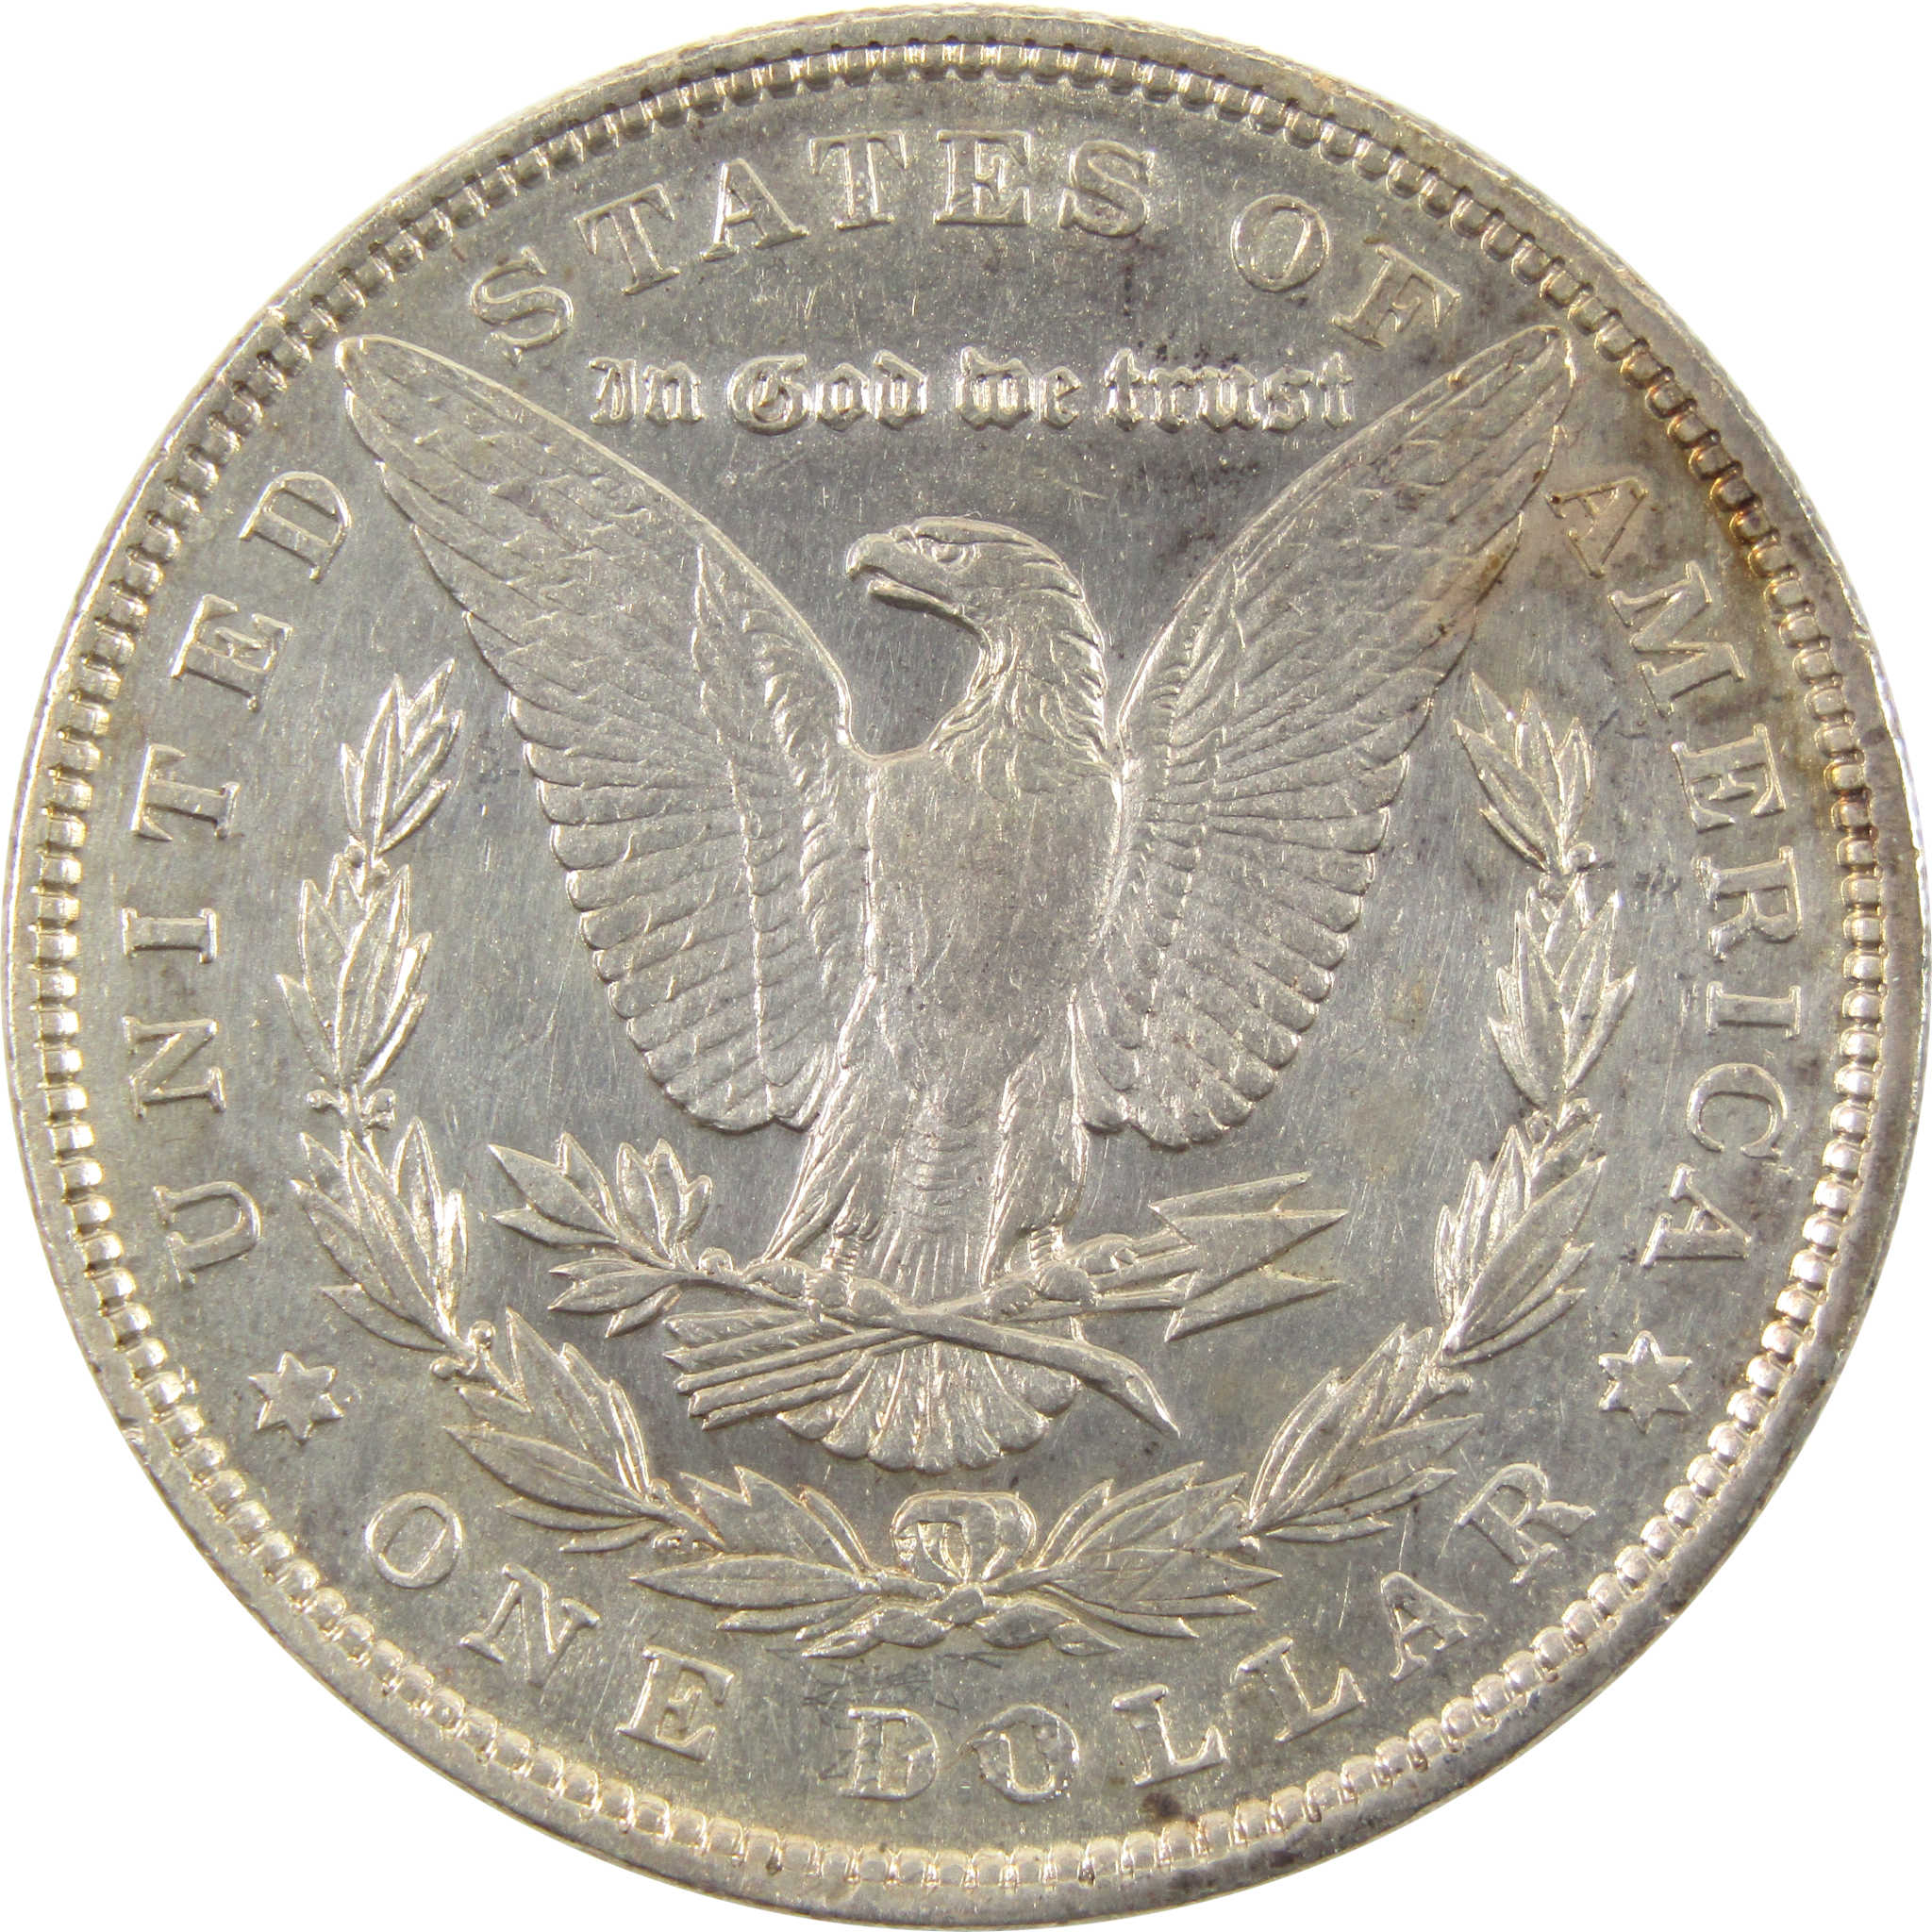 1893 Morgan Dollar AU About Unc Details 90% Silver $1 SKU:I10647 - Morgan coin - Morgan silver dollar - Morgan silver dollar for sale - Profile Coins &amp; Collectibles